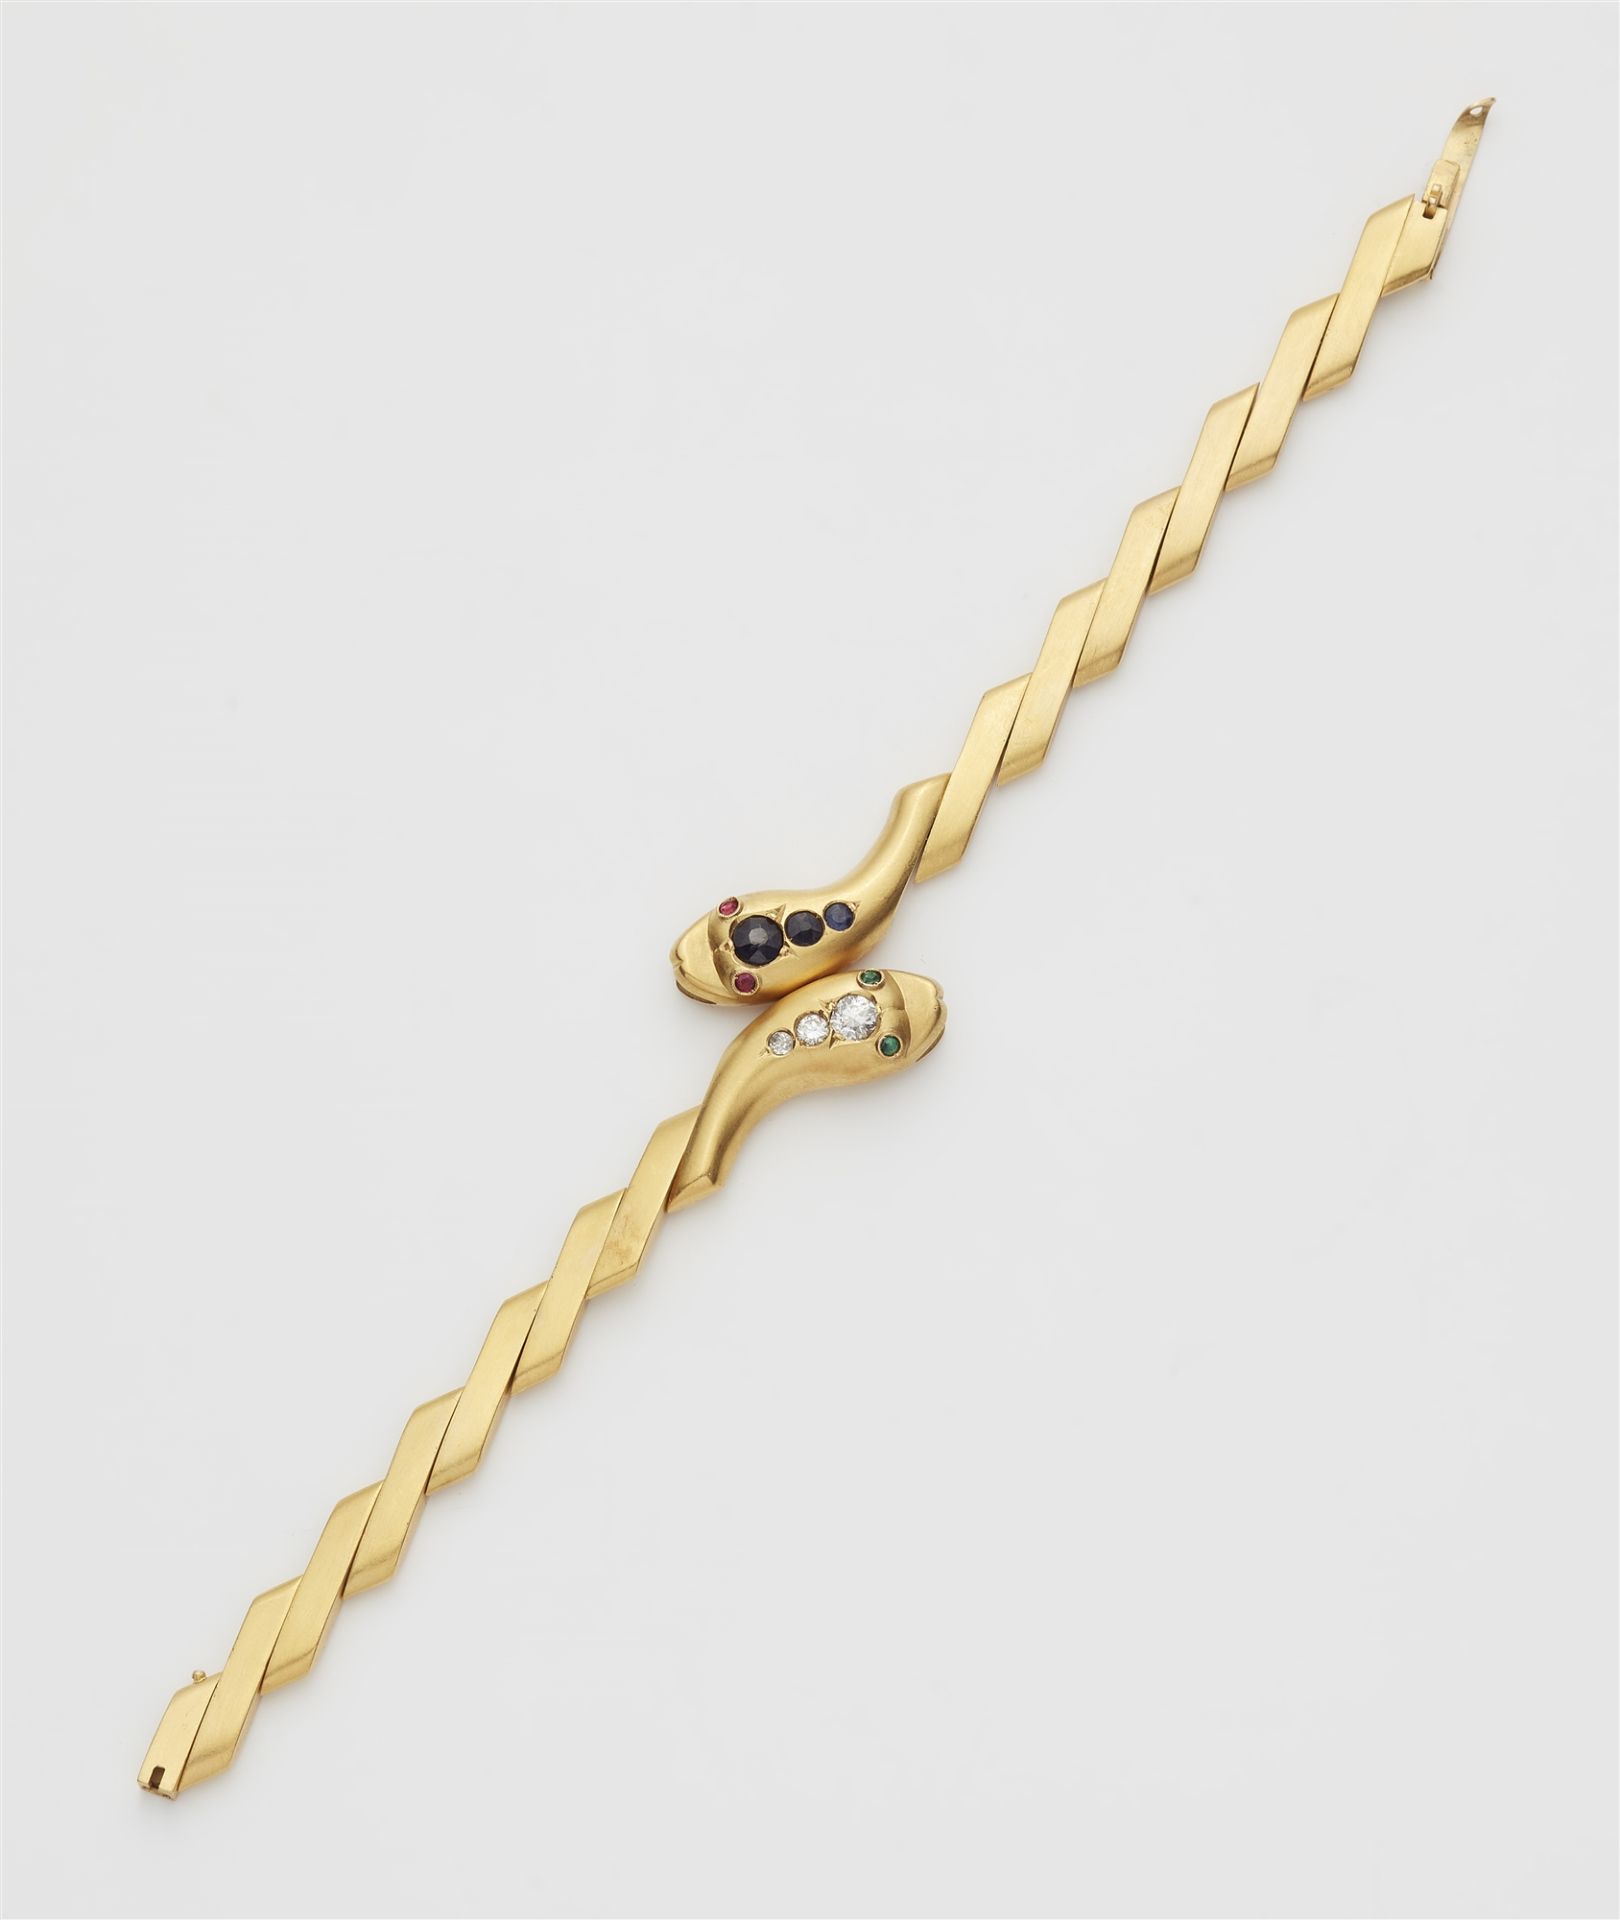 An 18k gold repoussé sapphire and diamond snake bracelet.